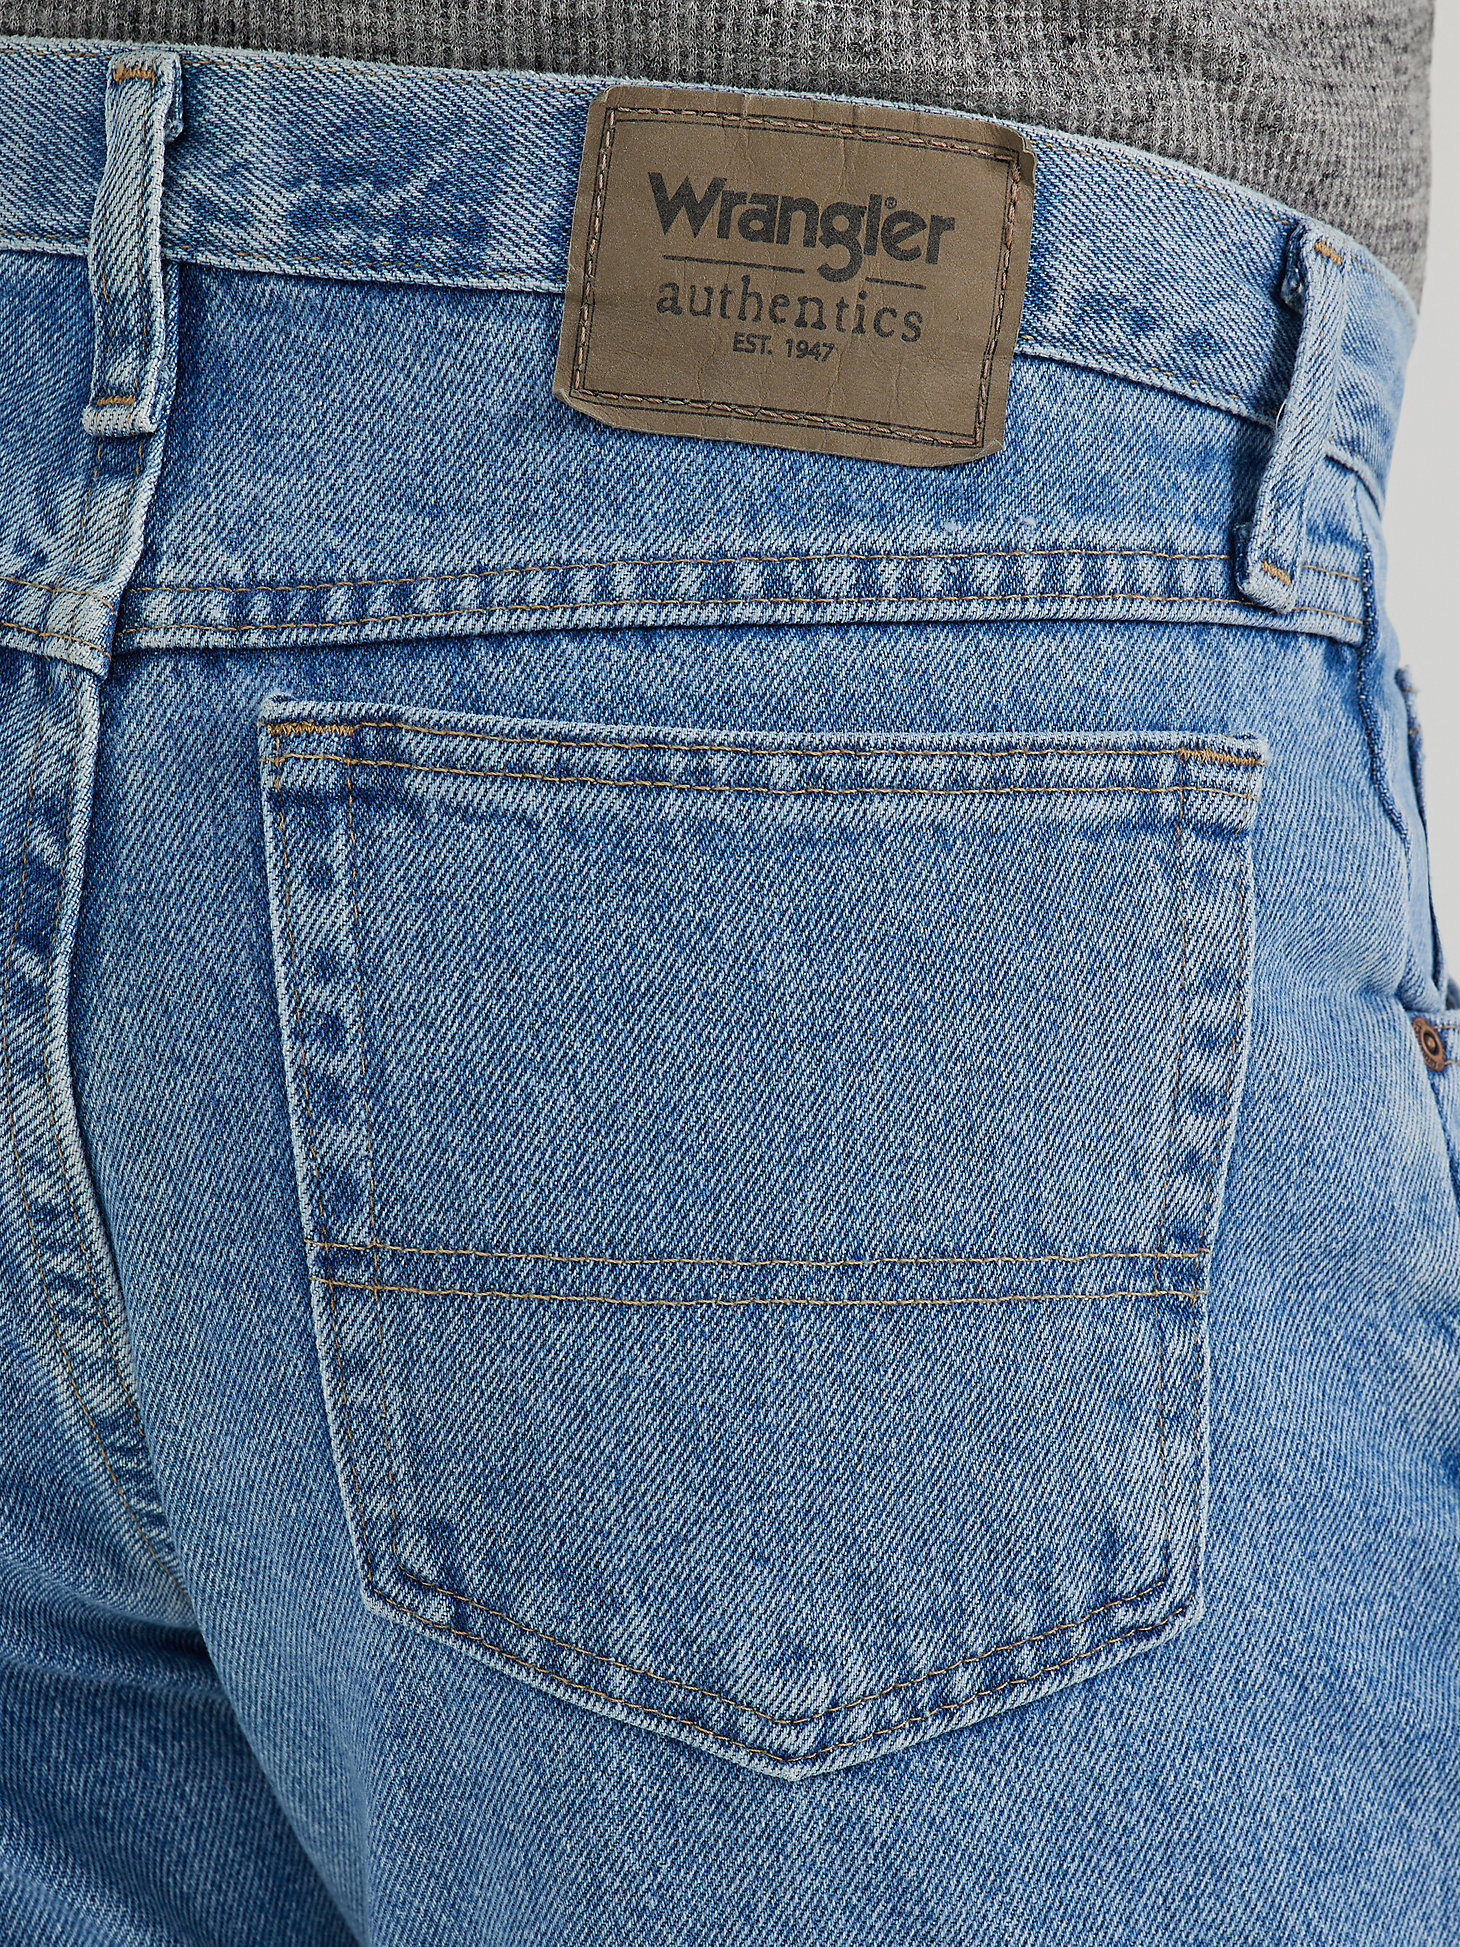 Men's Wrangler Authentics® Regular Fit Cotton Jean in Light Stonewash alternative view 2